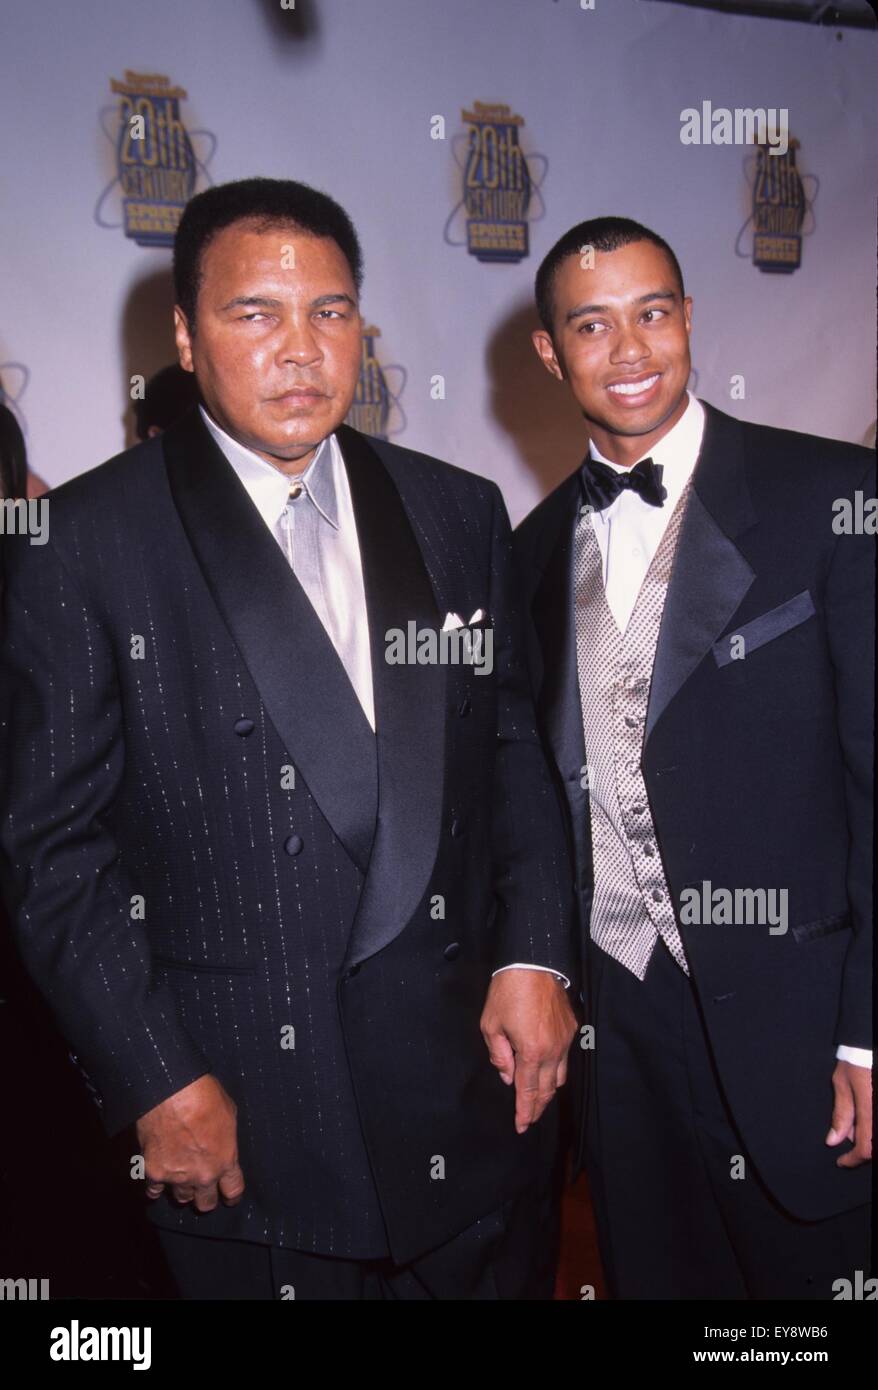 TIGER WOODS avec Muhammad Ali à Sports Illustrated Sports Awards au 20e siècle, New York 1999 MSG.k17387kj. (Crédit Image : © Kelly Jordan/Globe Photos via Zuma Zuma via fil Wire) Banque D'Images